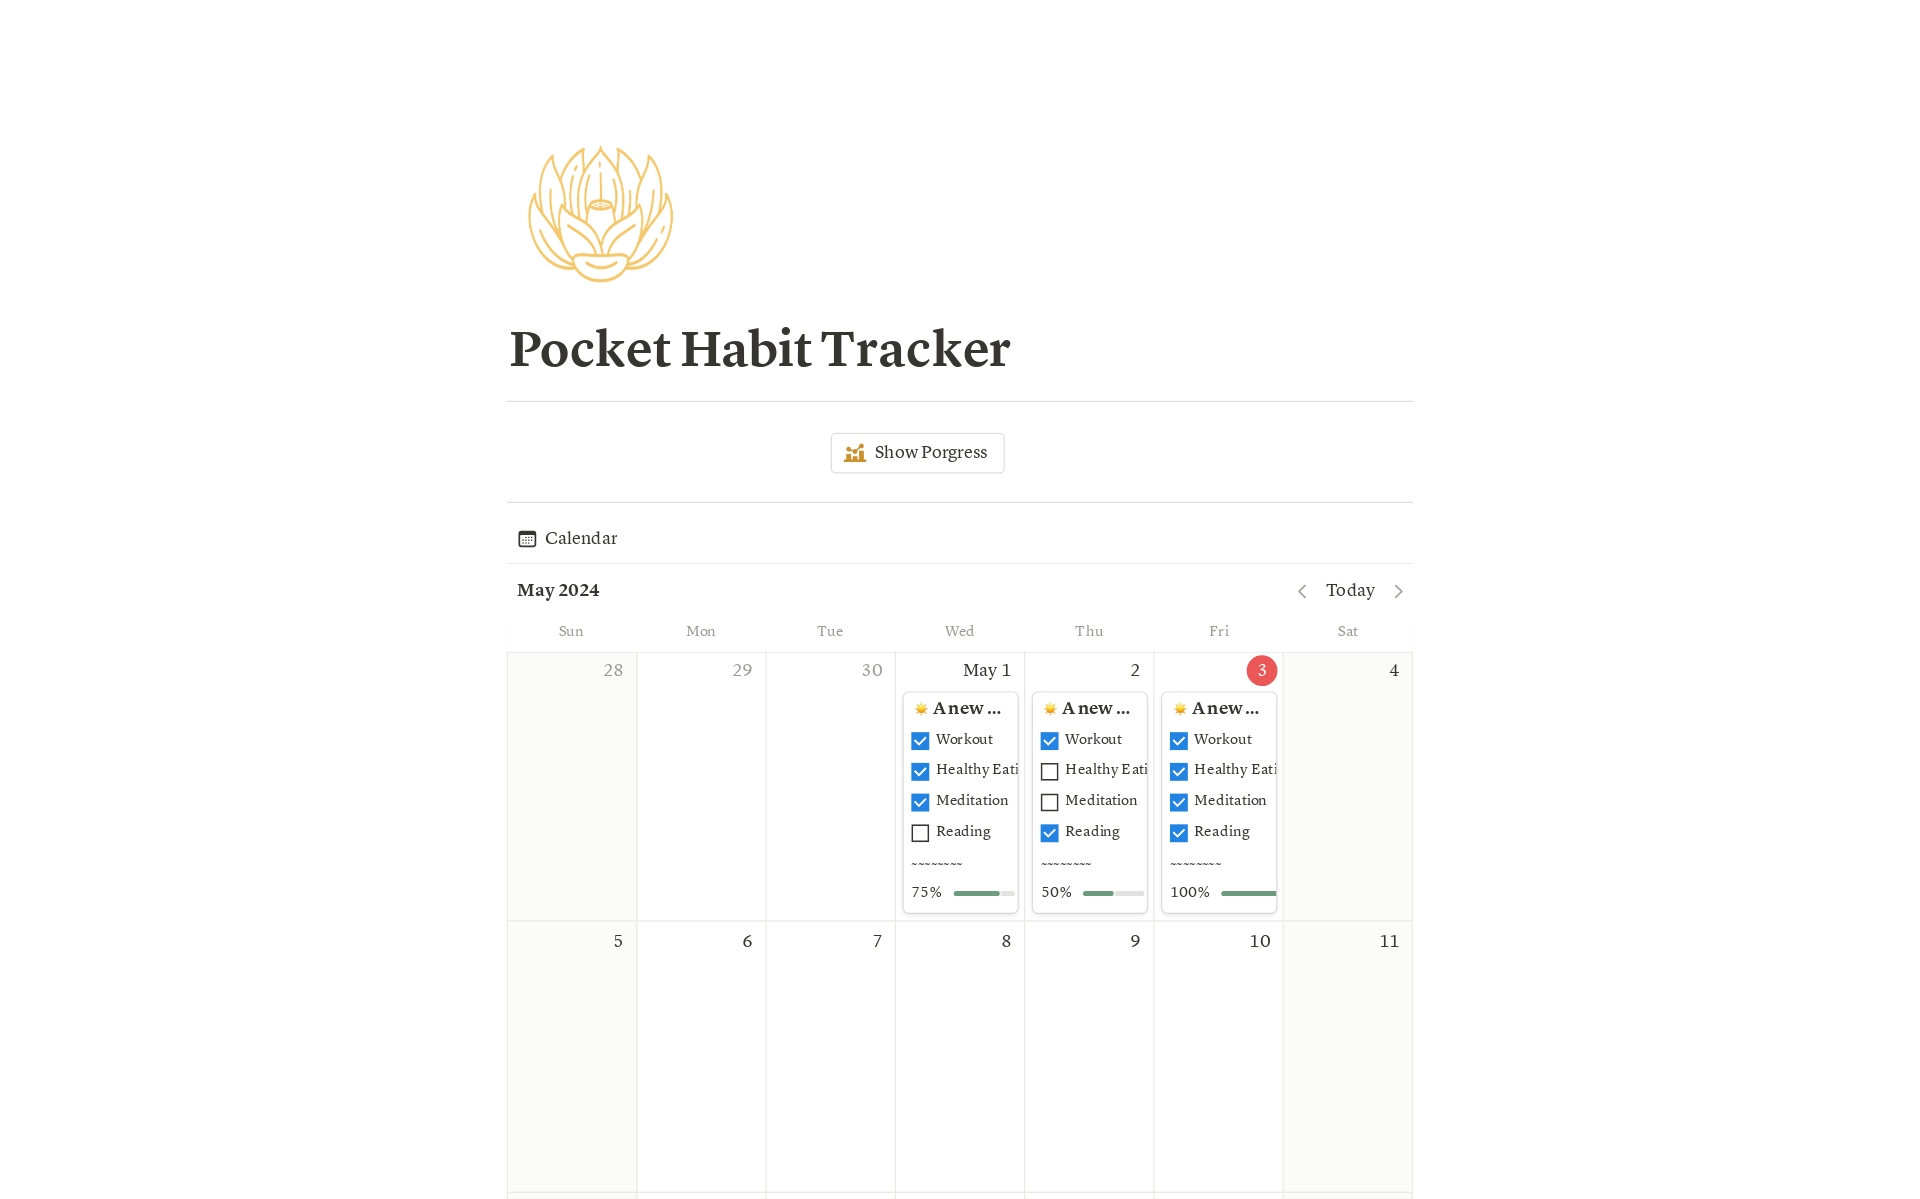 Vista previa de plantilla para Pocket Habit Tracker